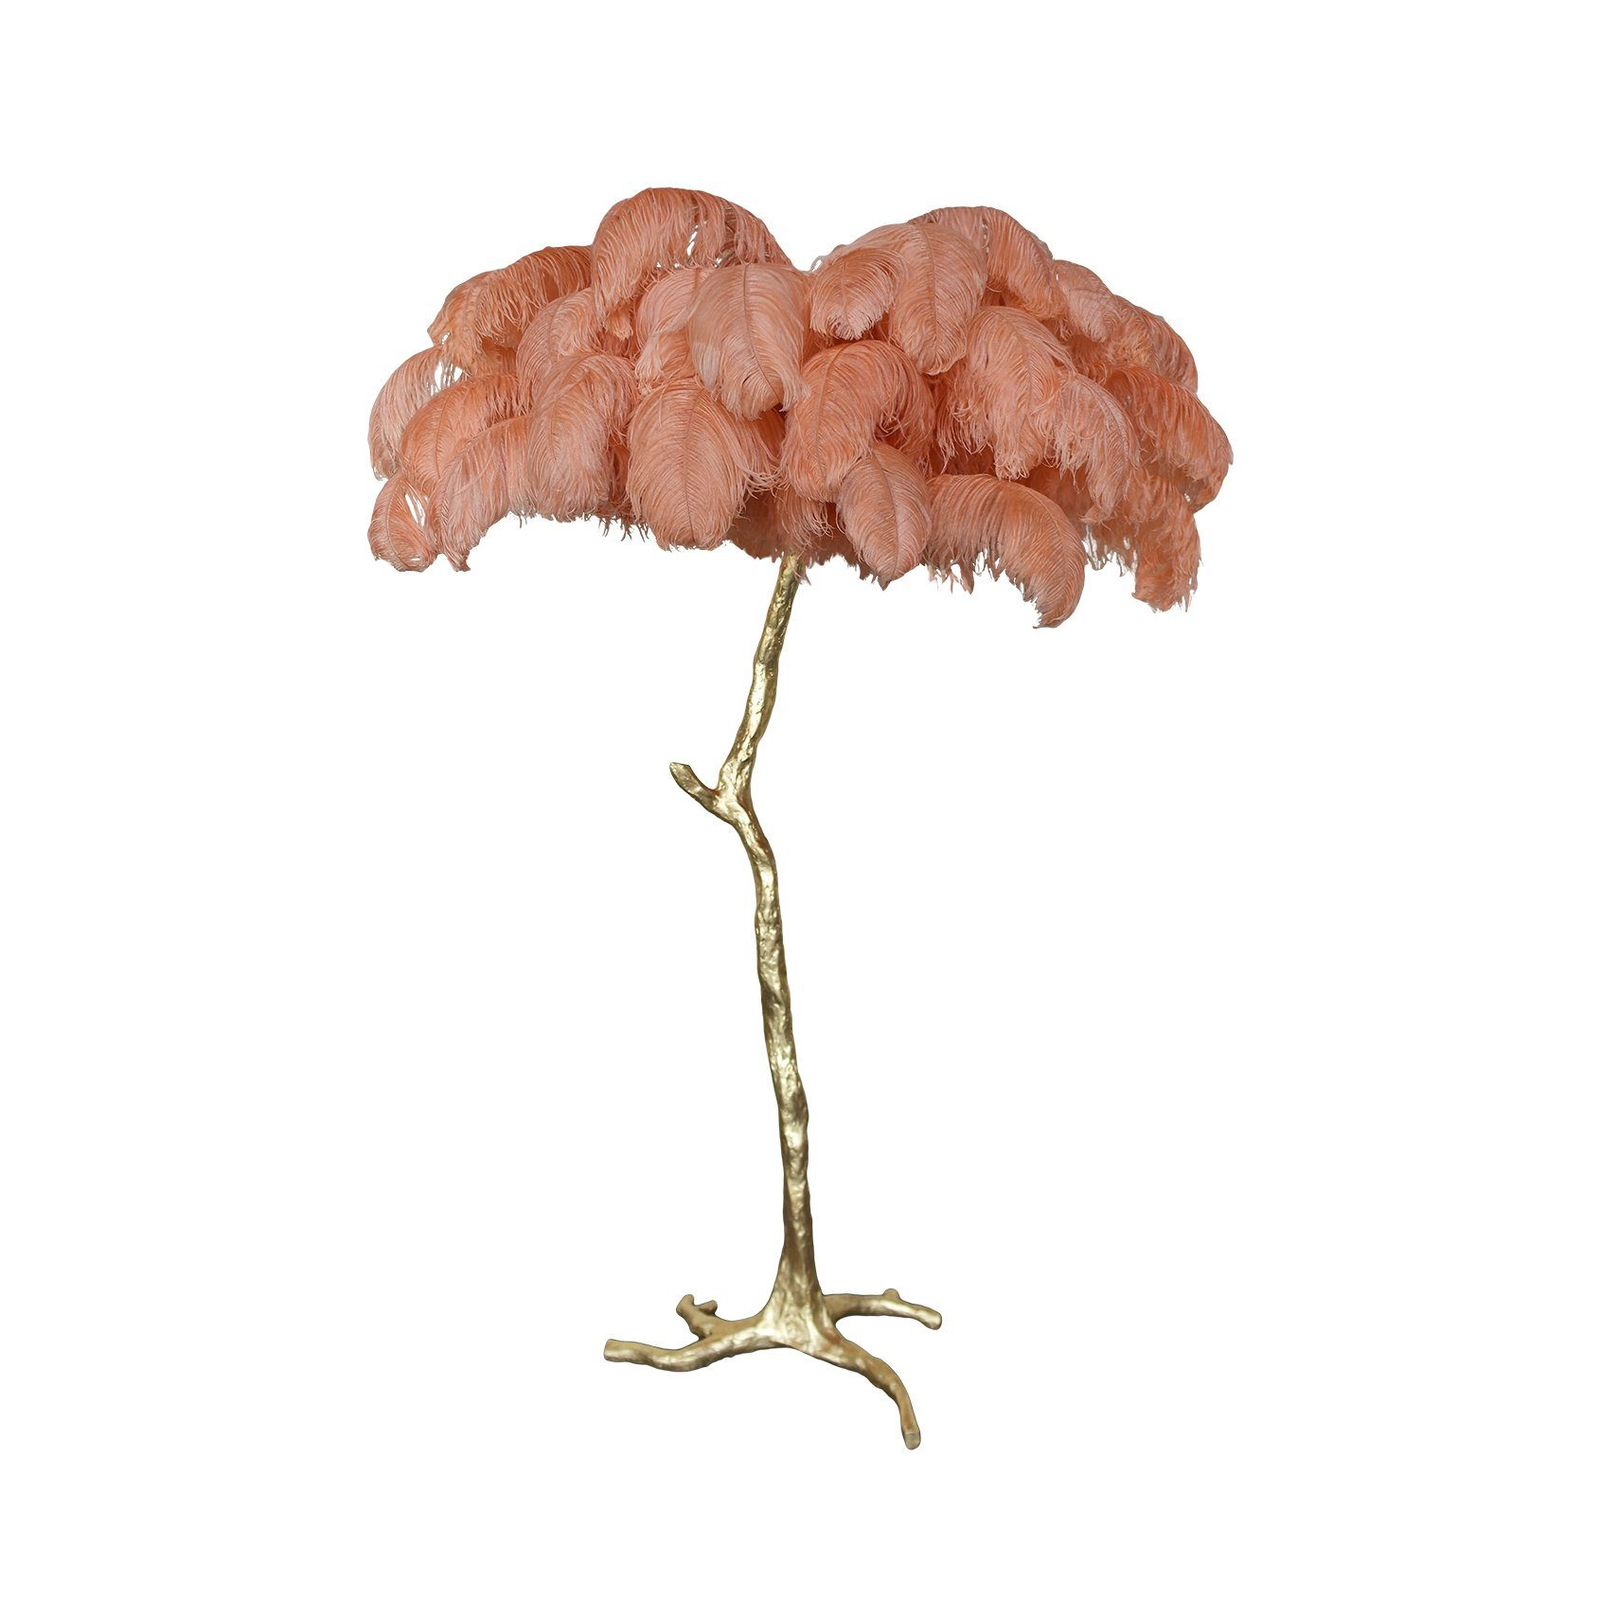 Resin Floor Lamp with Ostrich Feathers, 39.4" Diameter x 63" Height, 100cm Dia x 160cm H, Gold, Mandarin Orange.